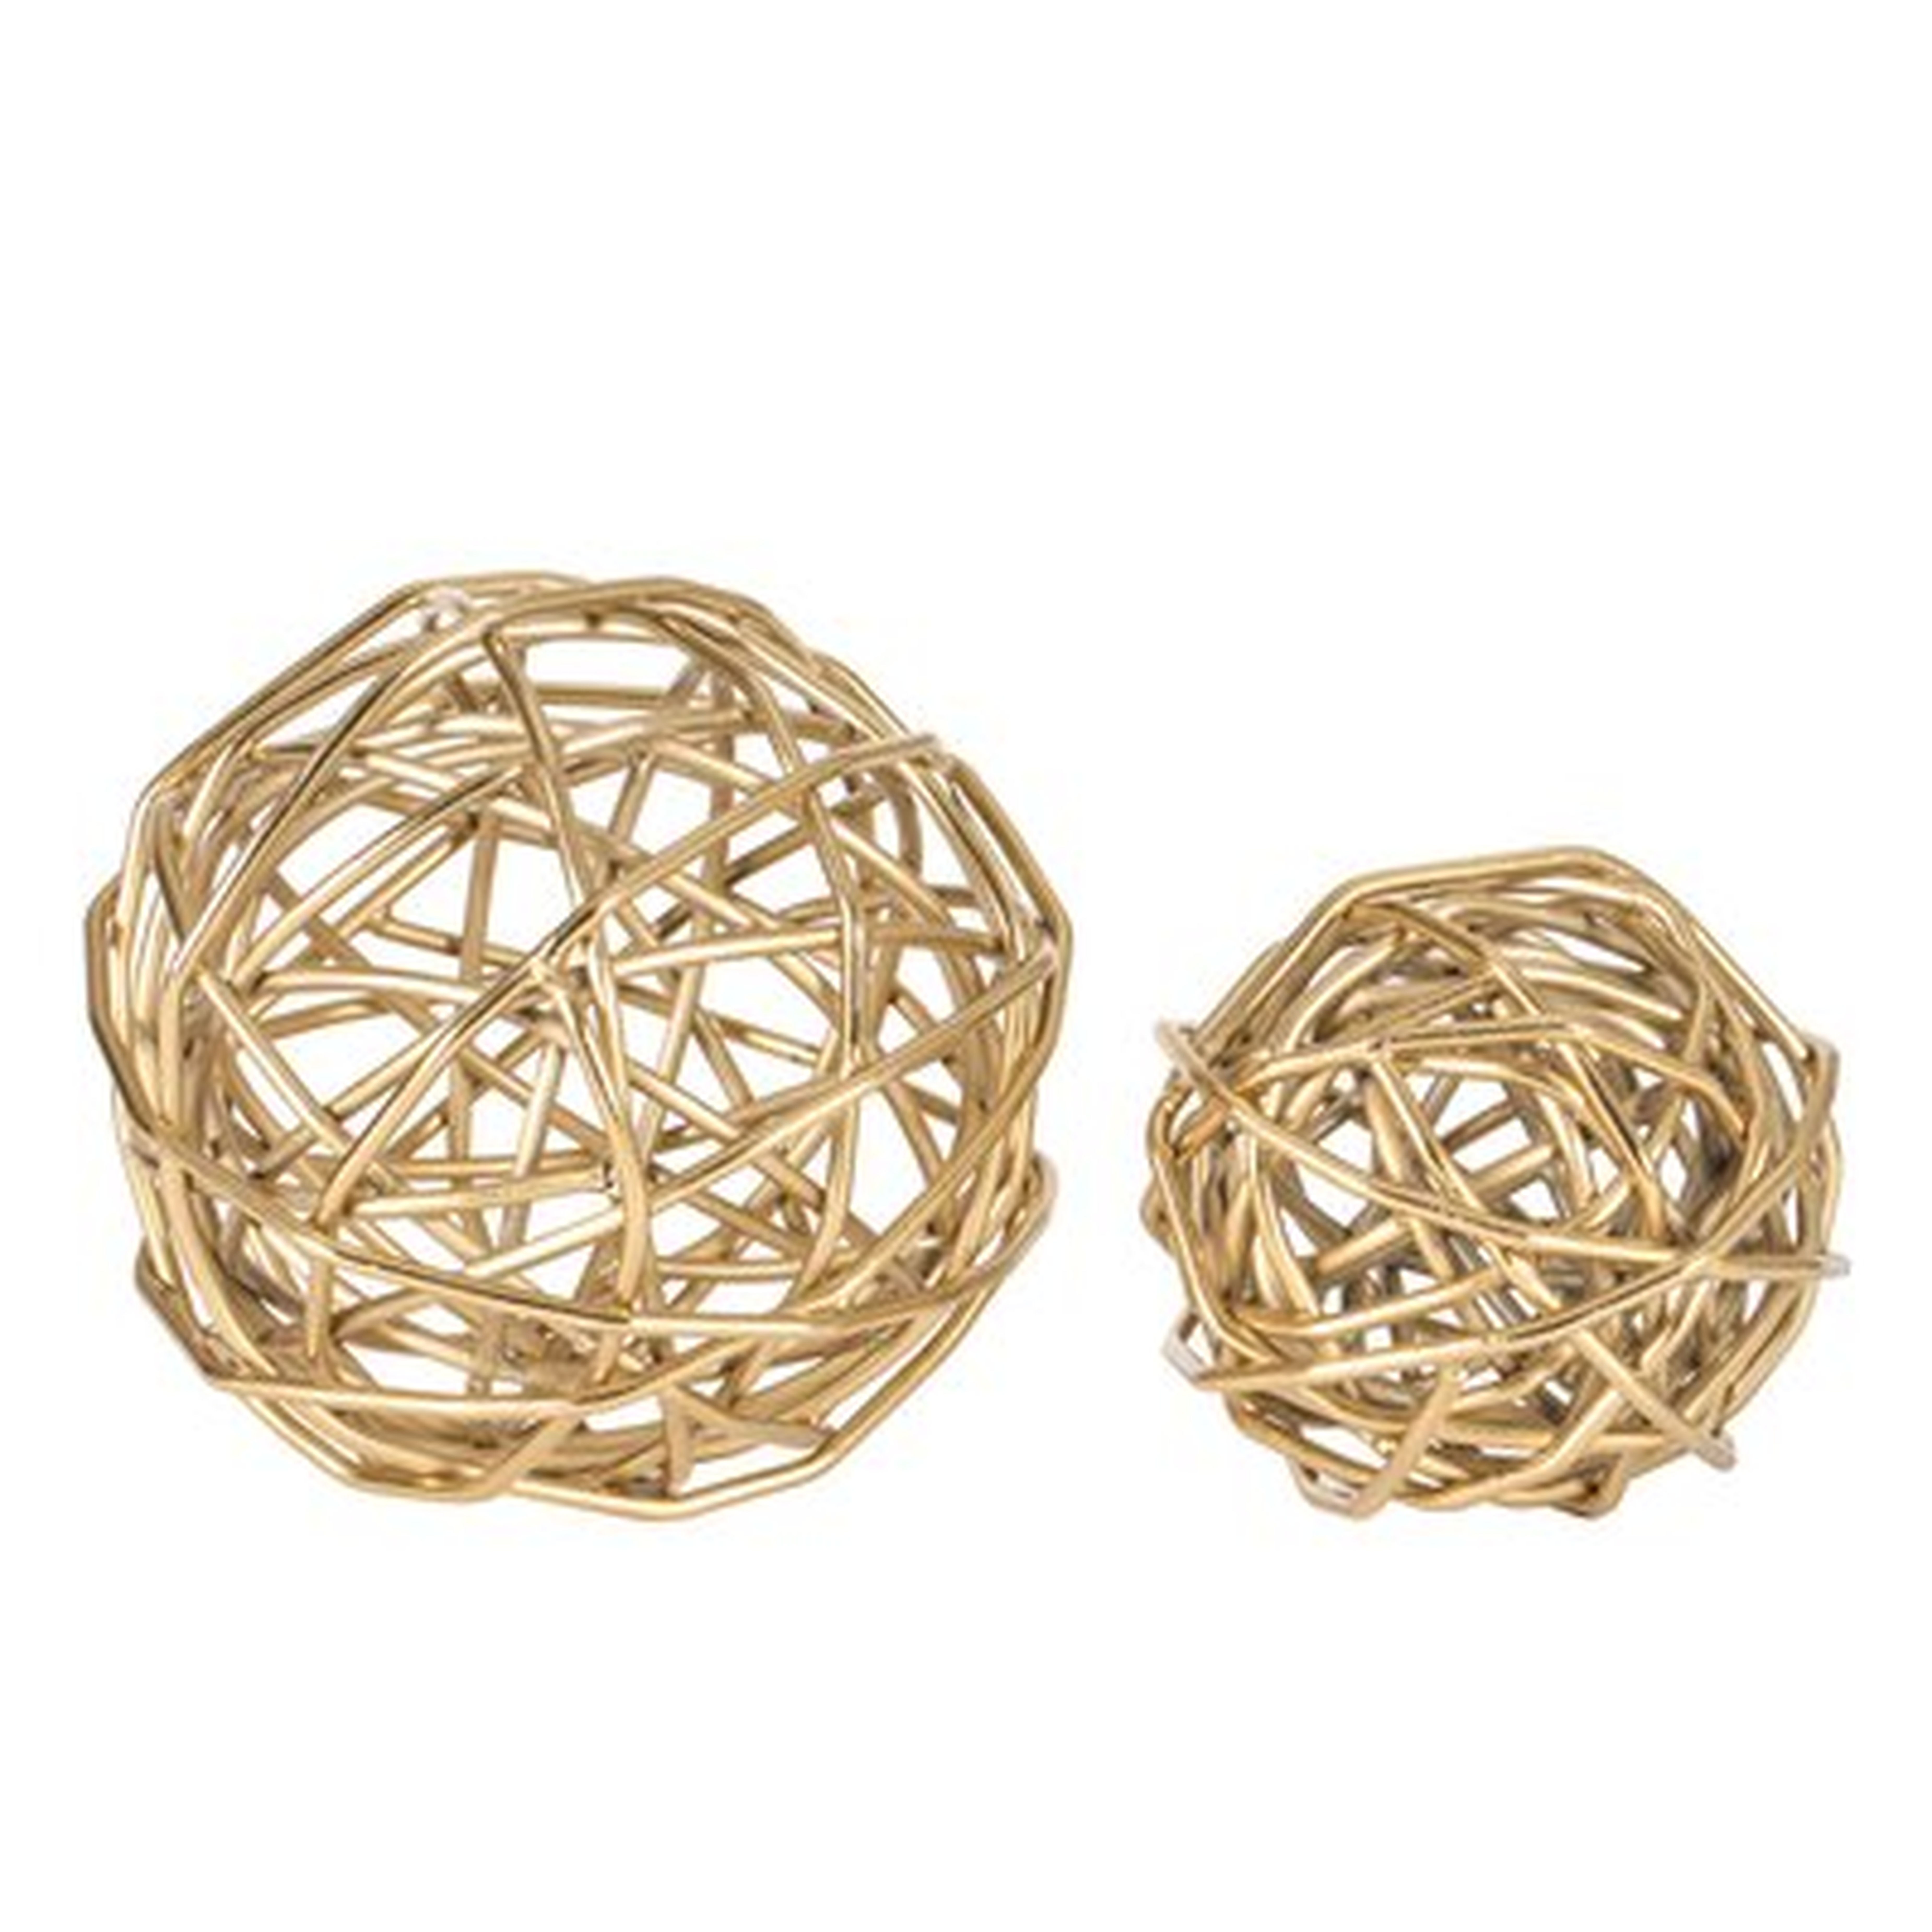 Meserve Metal Sphere Sculpture, Gold, Set of 2 - Wayfair